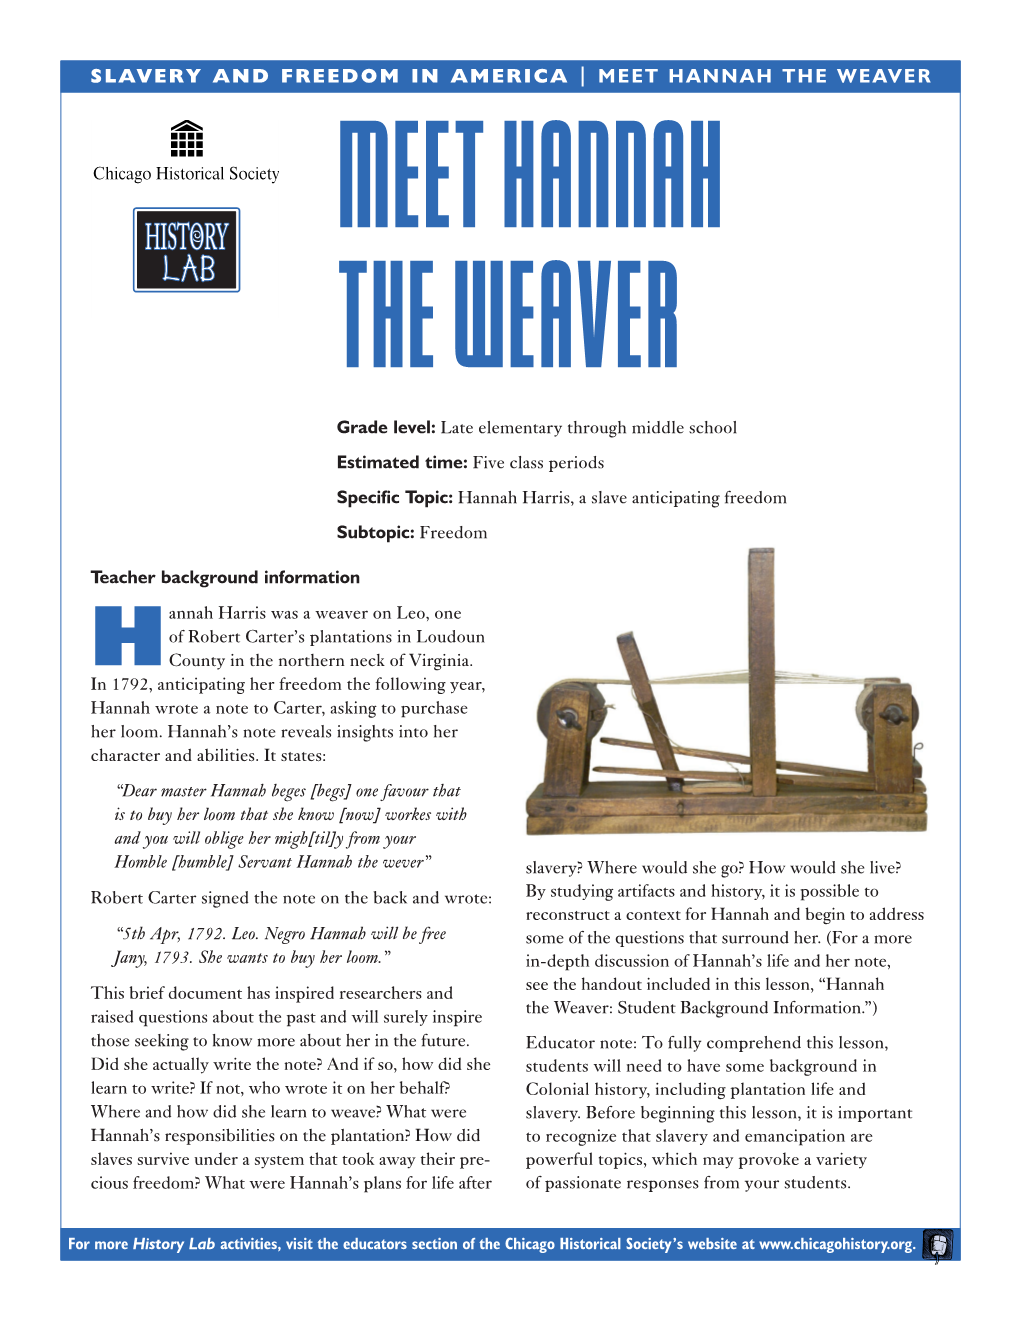 Meet Hannah the Weaver